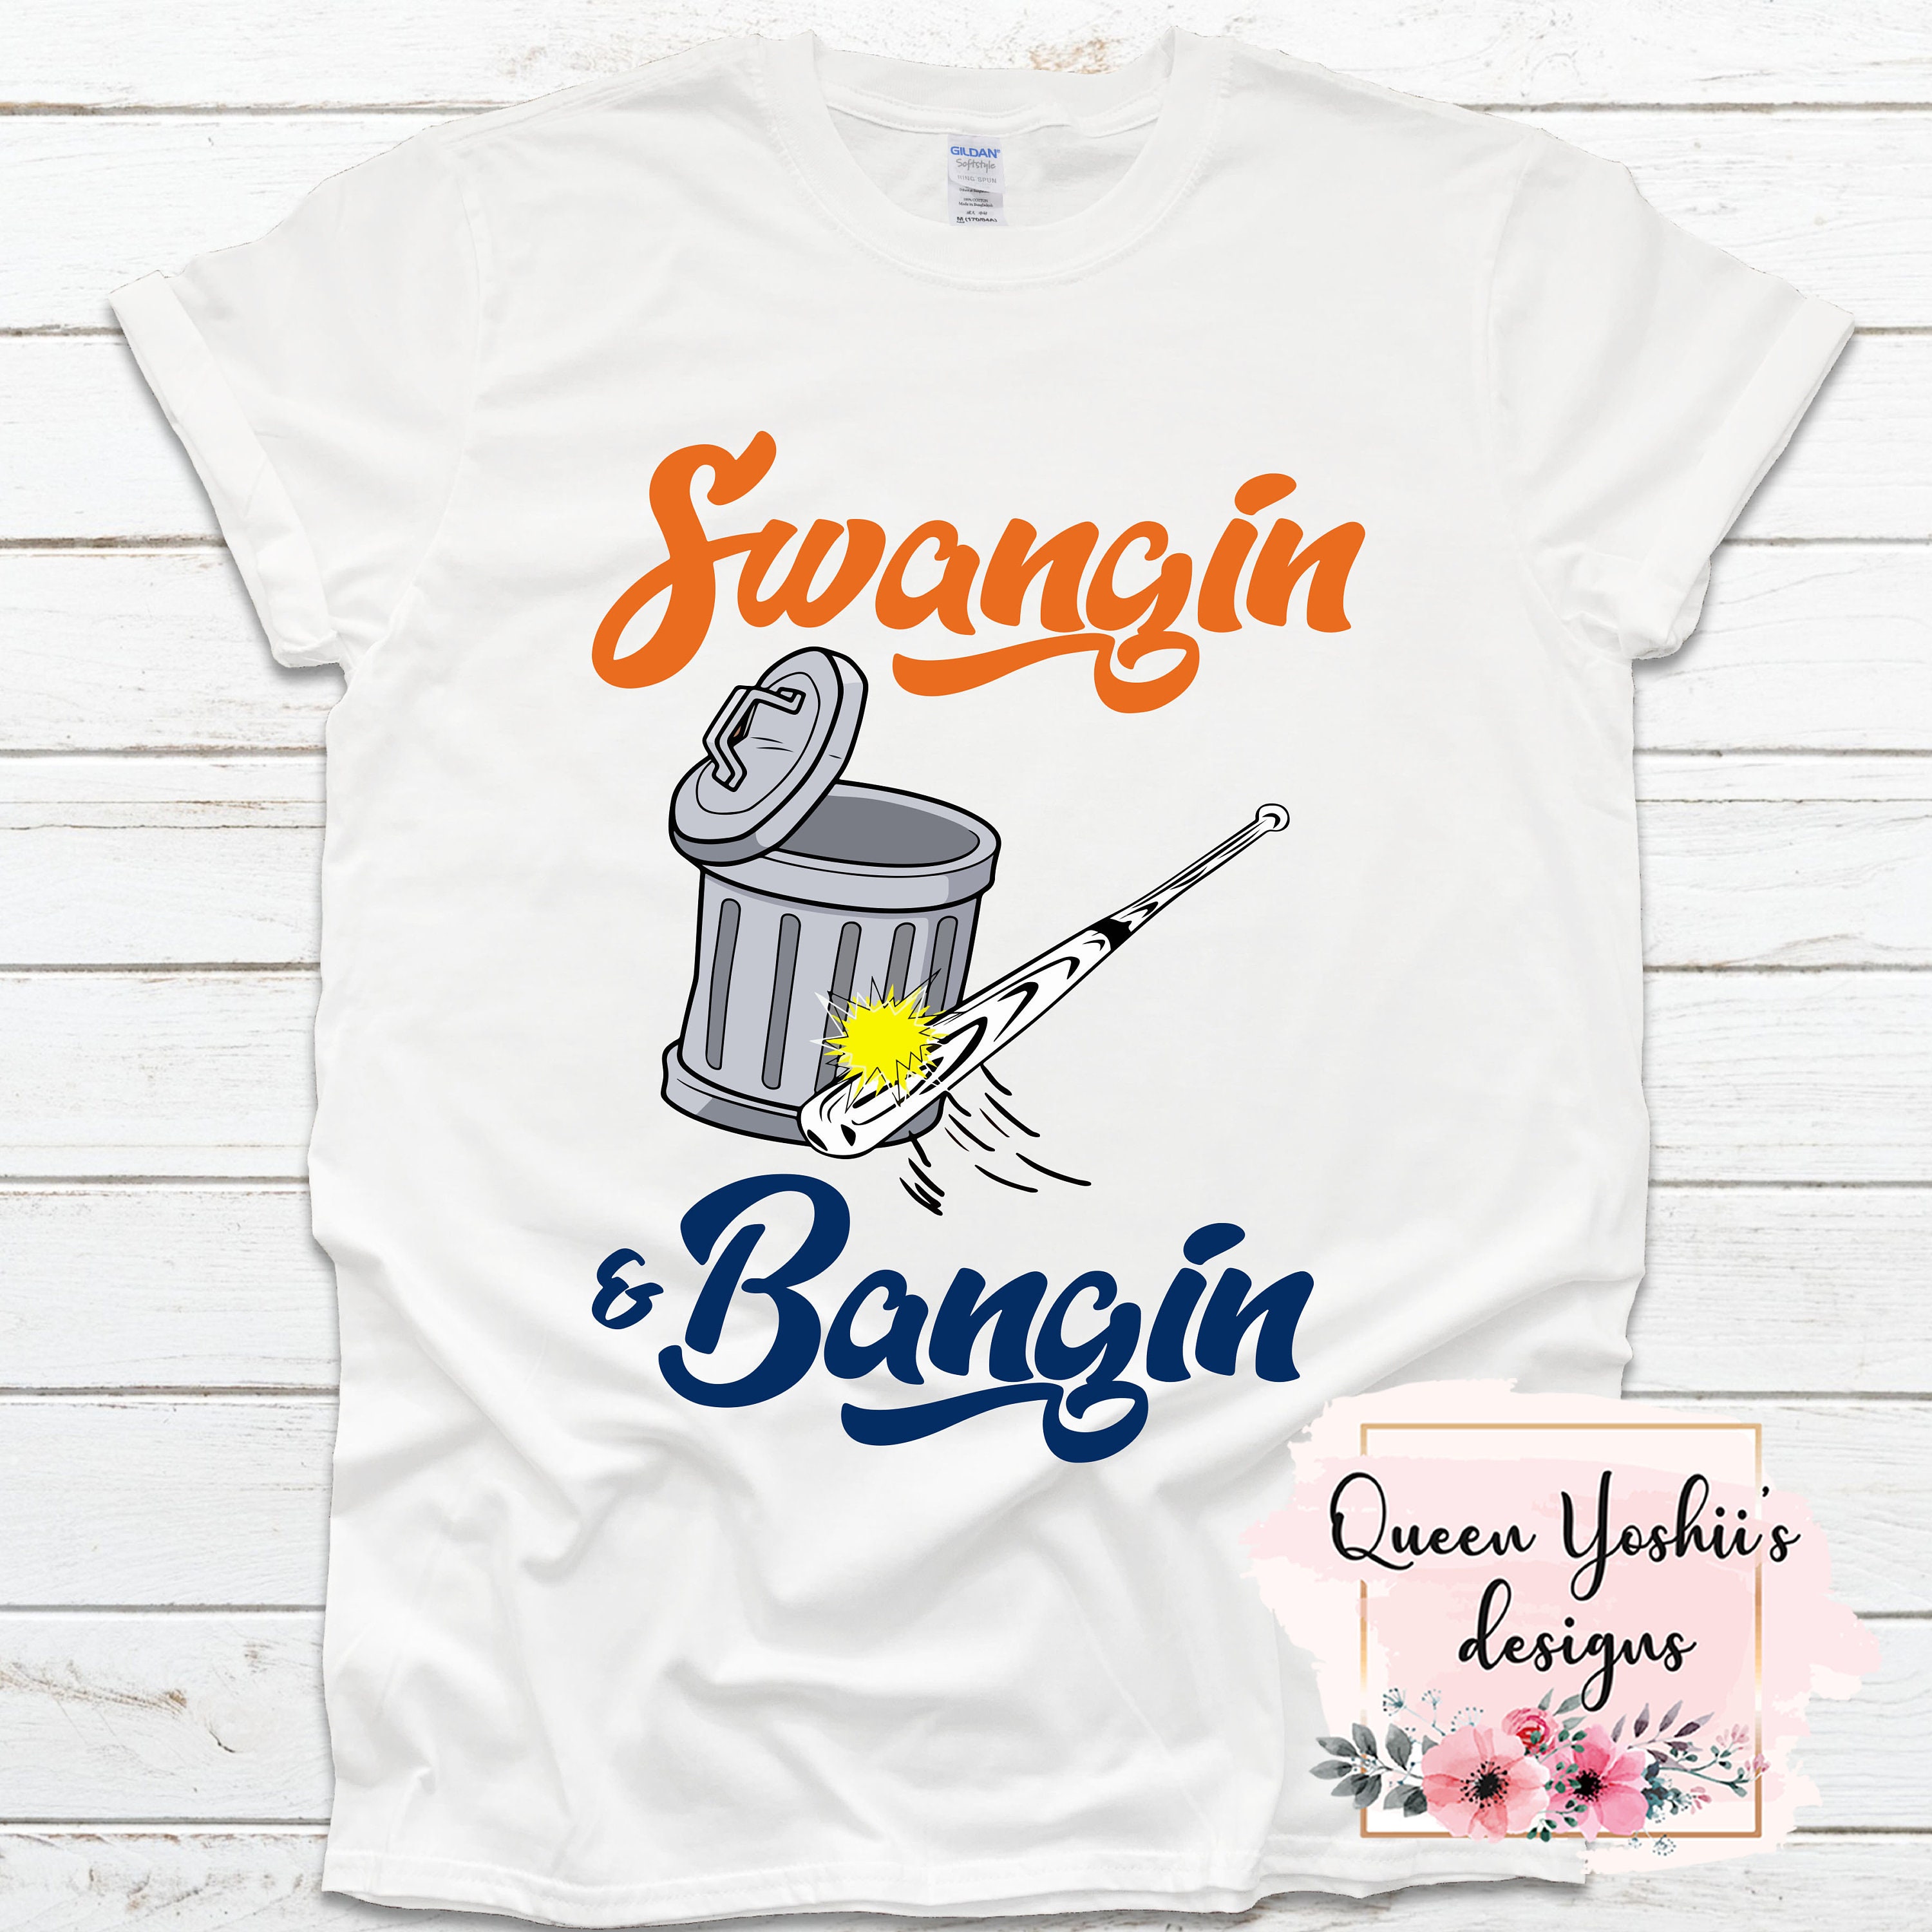 Swangin & Bangin T-shirt Baseball Shirt Houston Baseball 